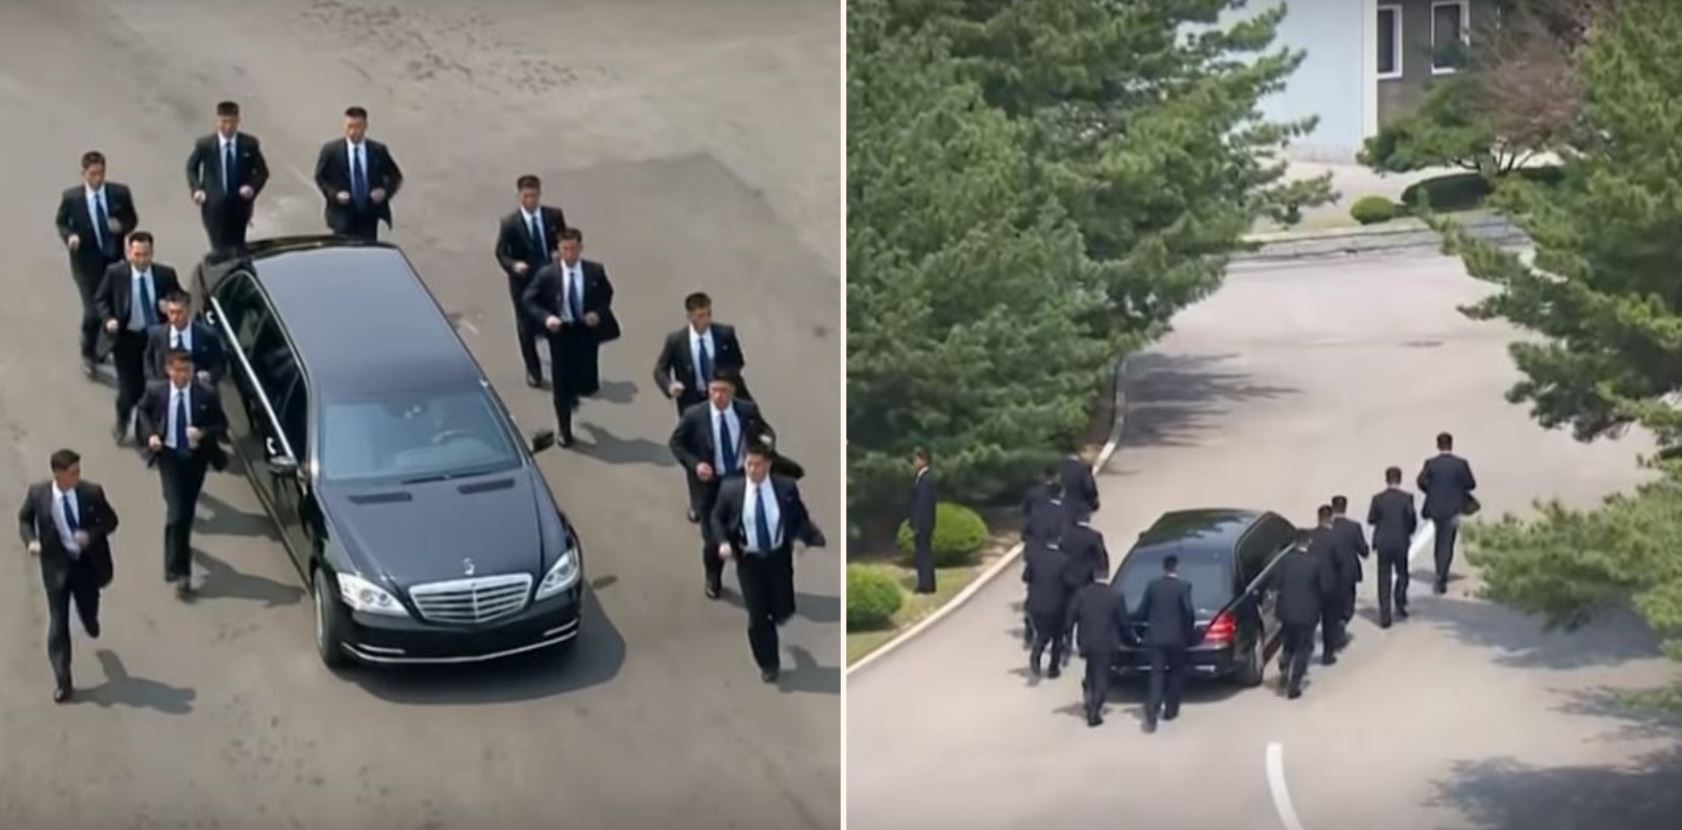 Kim Jong Un’s bodyguards run alongside his limo as he heads for lunch